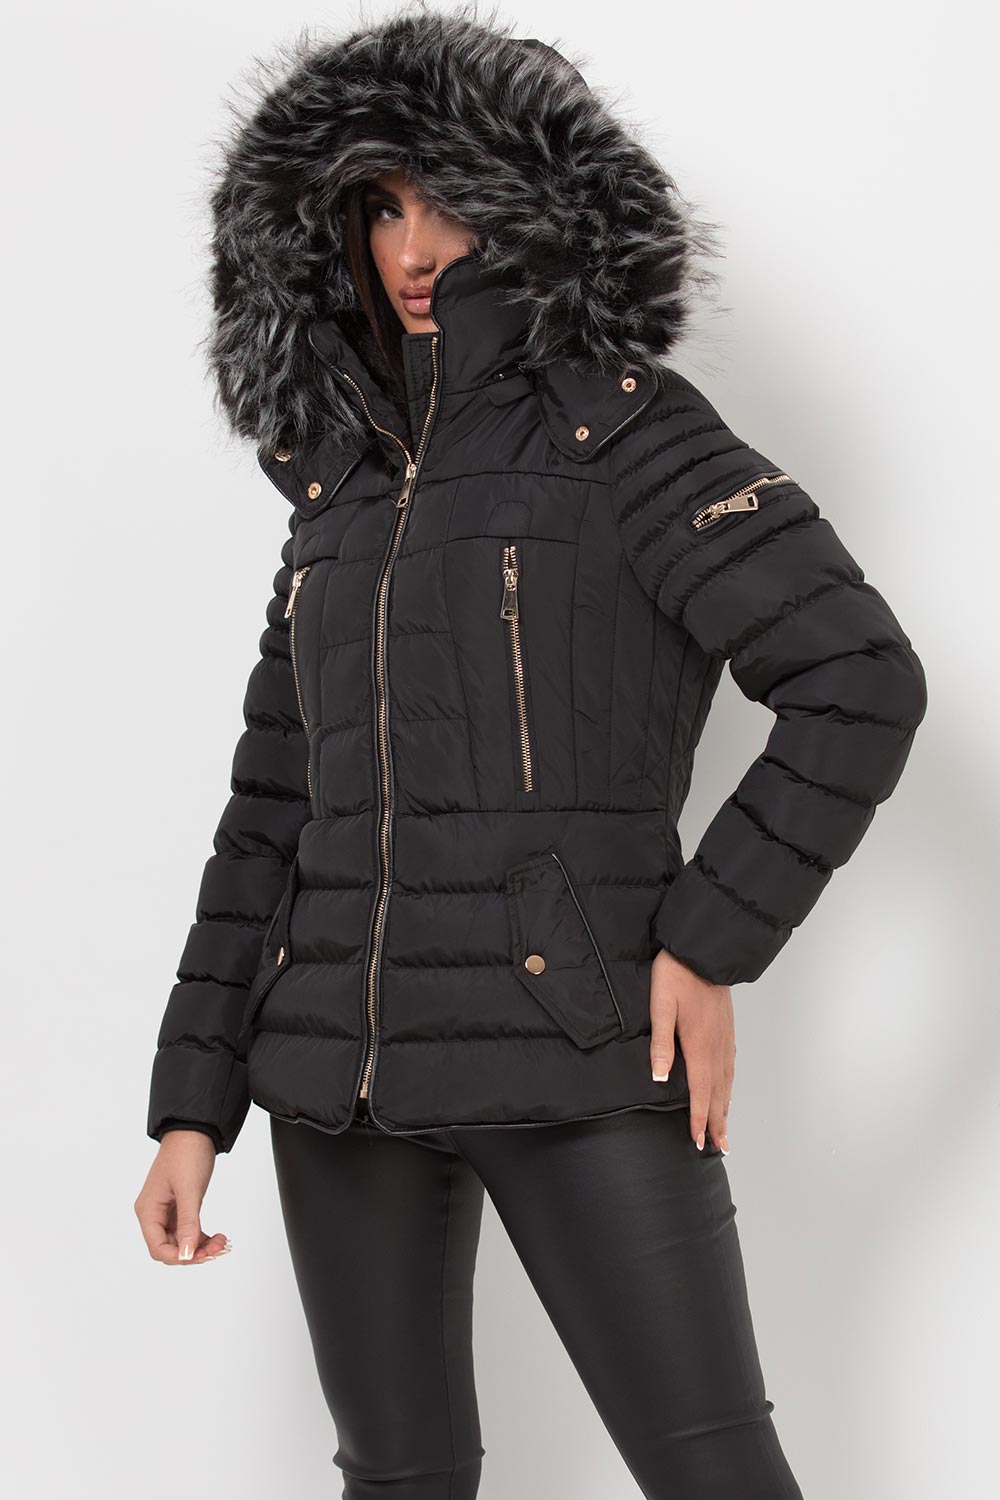 womens winter jacket black